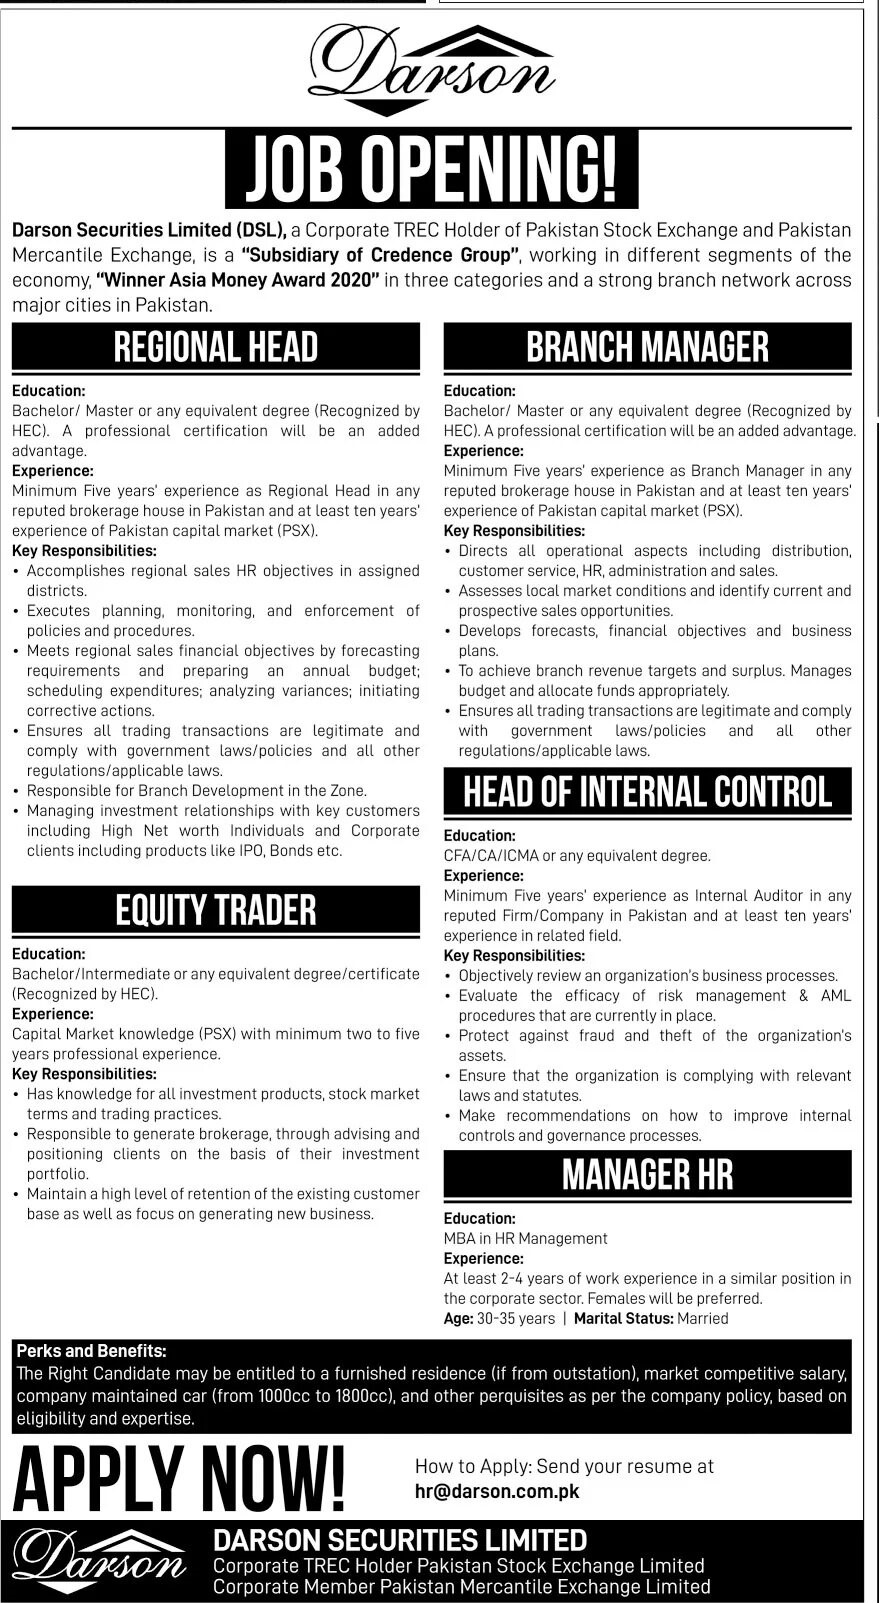 hr@darson.com.pk - Darson Securities Limited Jobs 2021 in Pakistan